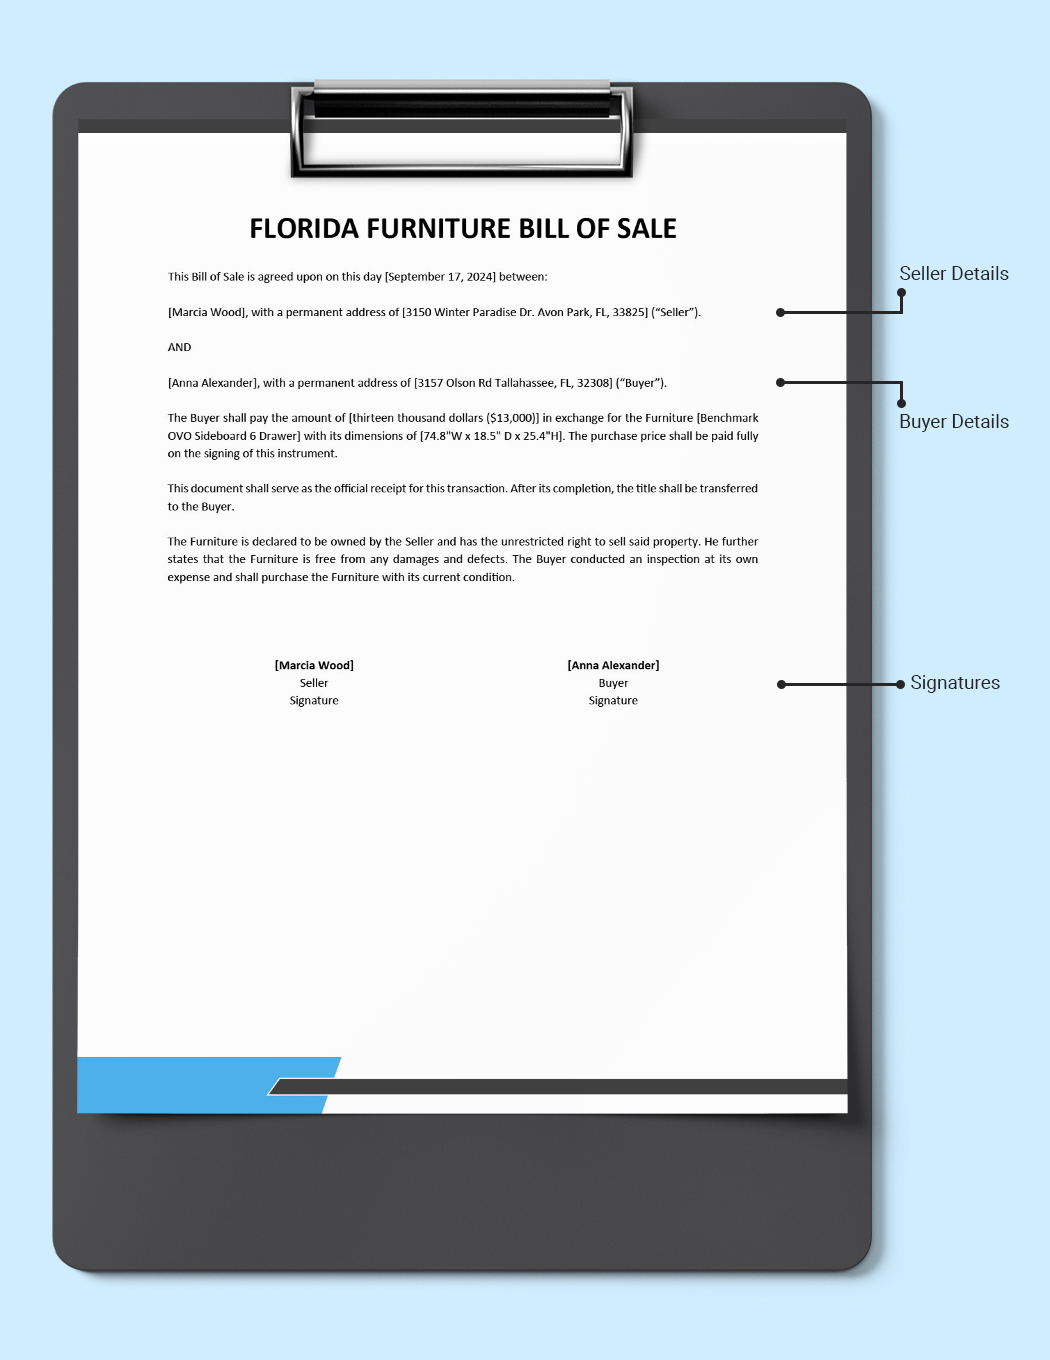 Florida Furniture Bill of Sale Template